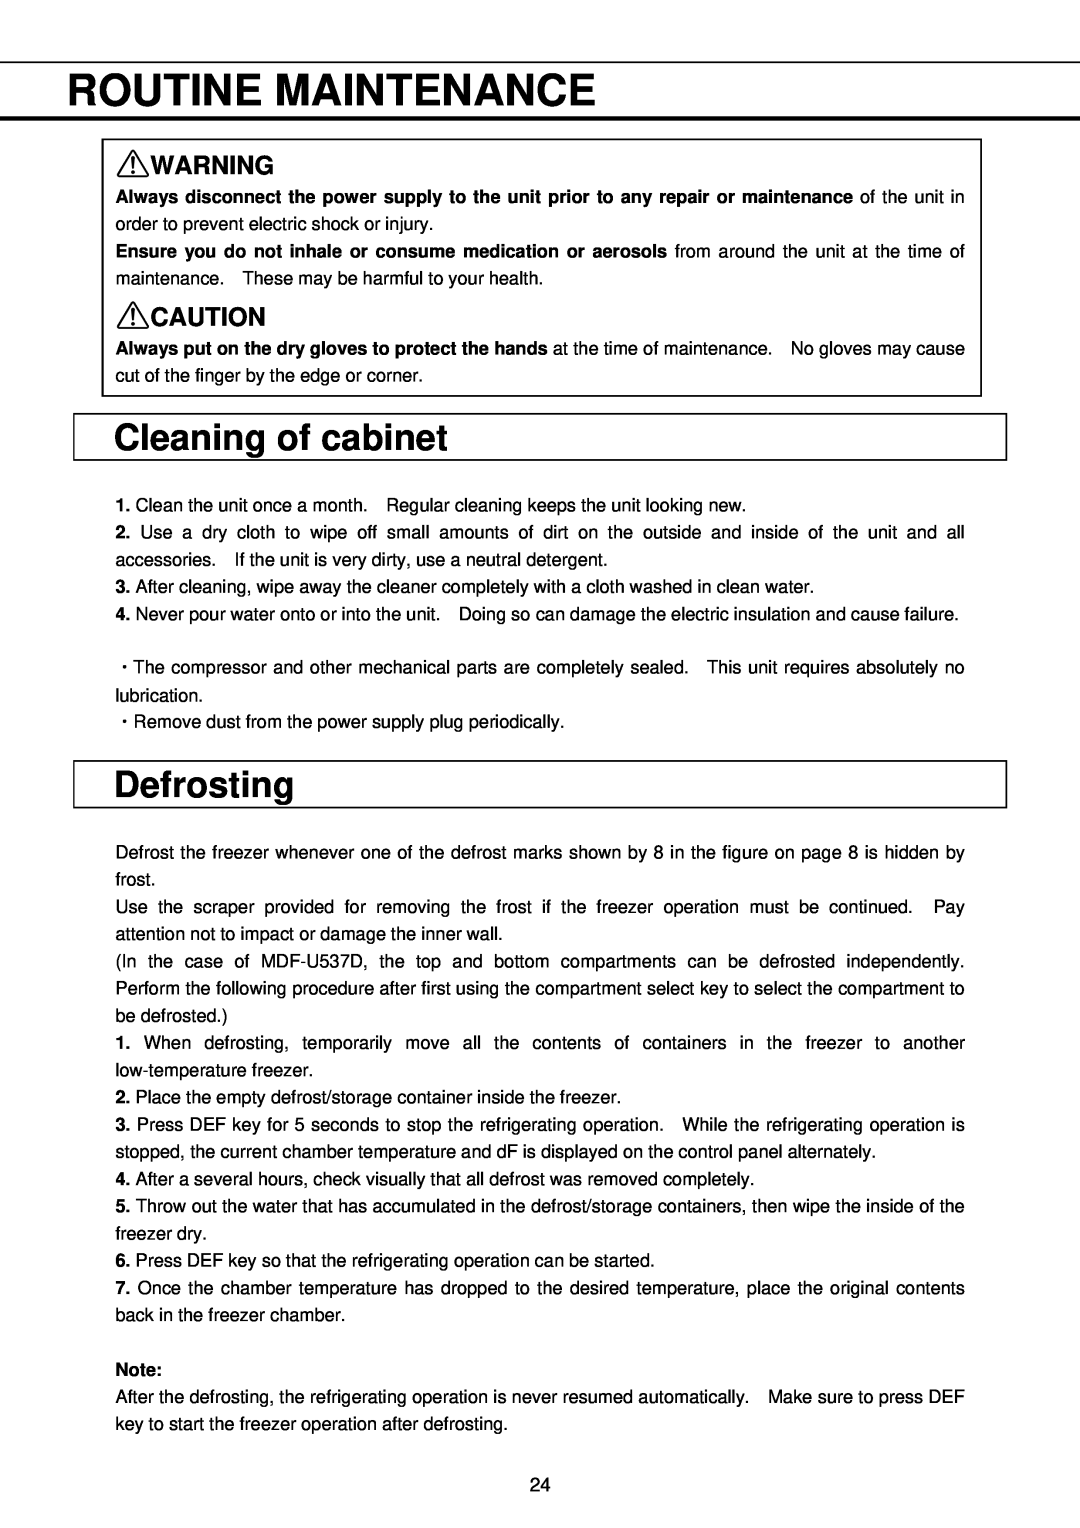 Sanyo MDF-U333, MDF-U537 instruction manual Routine Maintenance, Cleaning of cabinet, Defrosting 